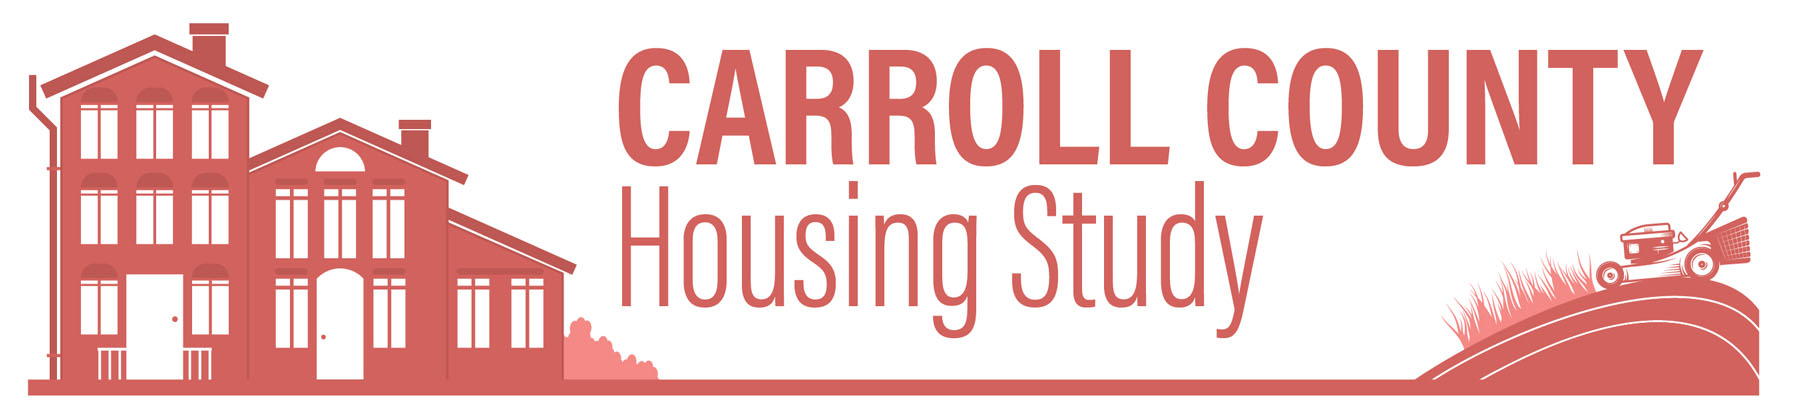 Carroll County Housing Study